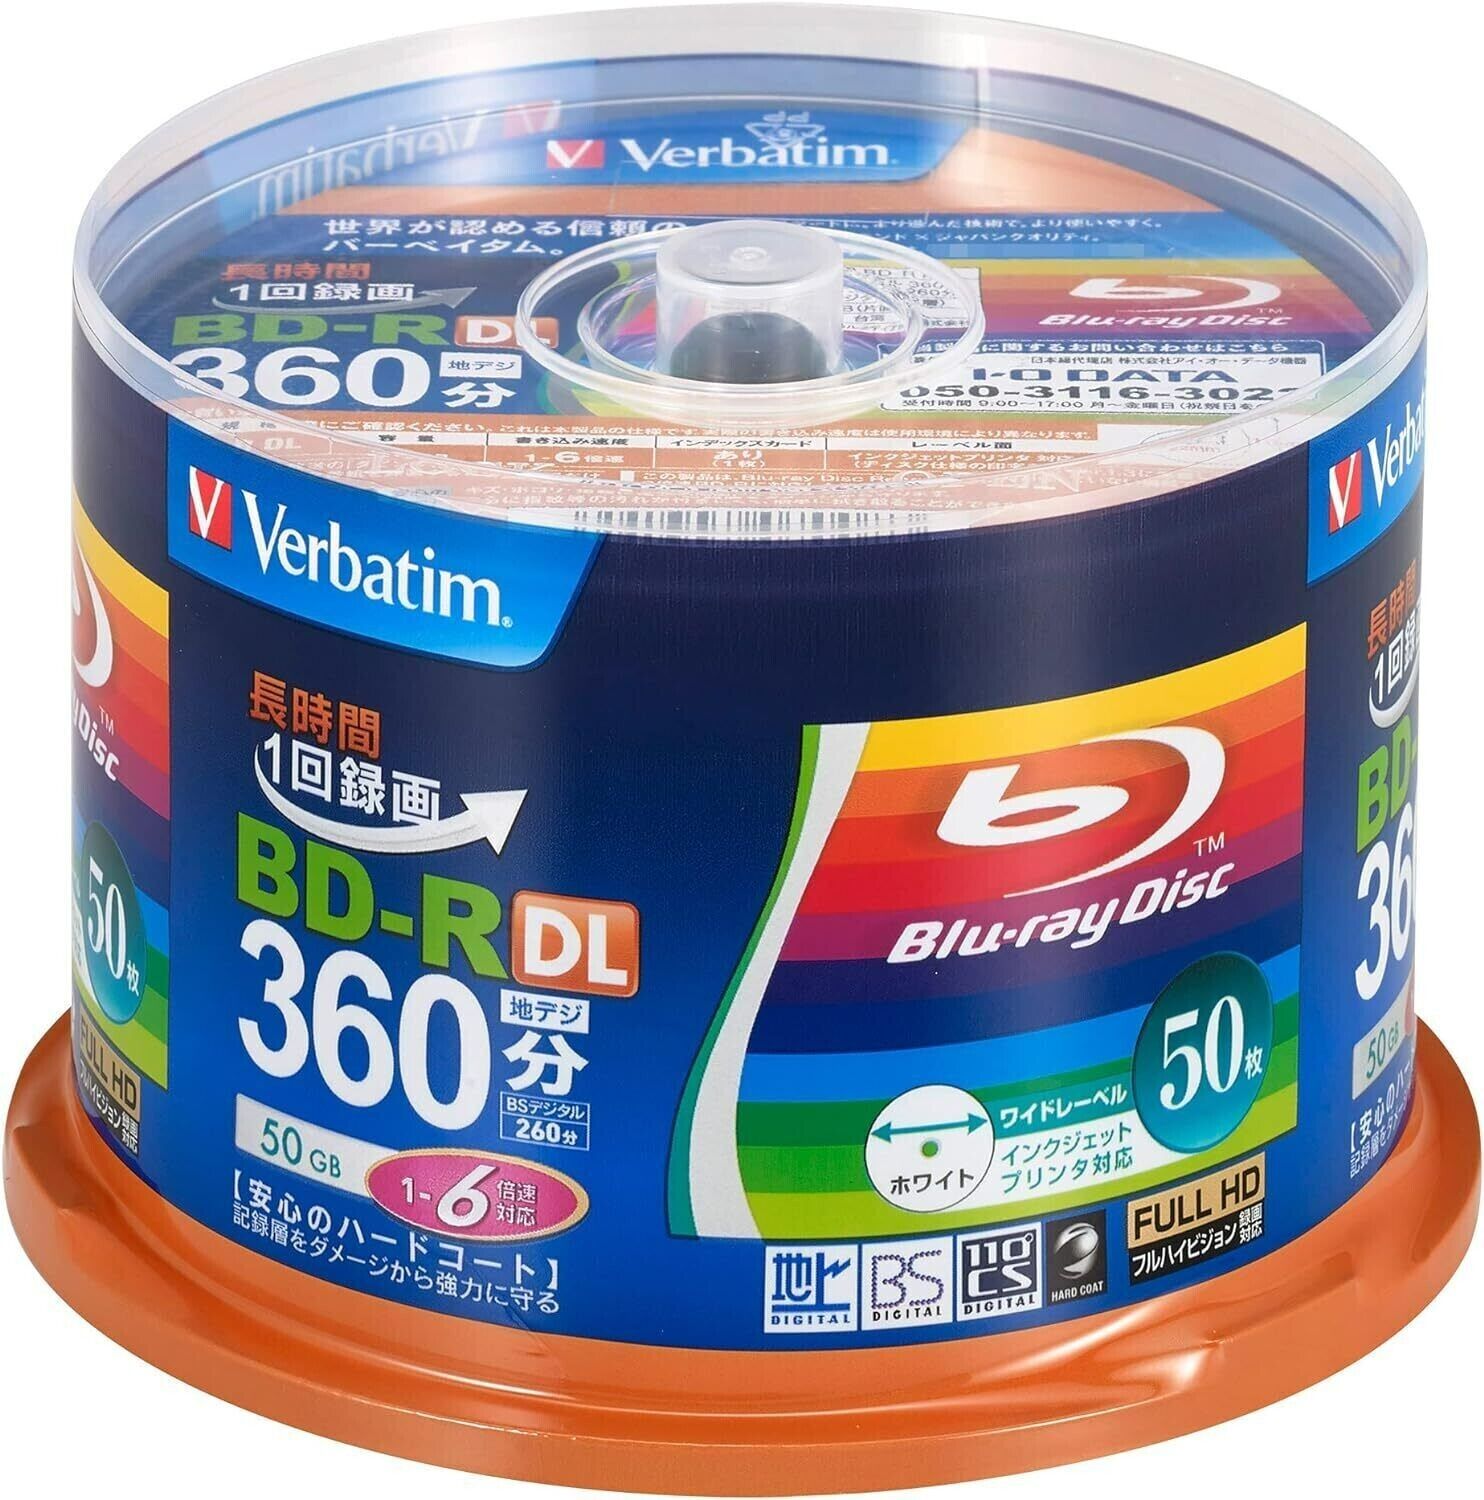 Verbatim Blank Blu-ray BD-R DL 50GB 1-6x 50 discs VBR260RP50SV1 Inkjet Printable